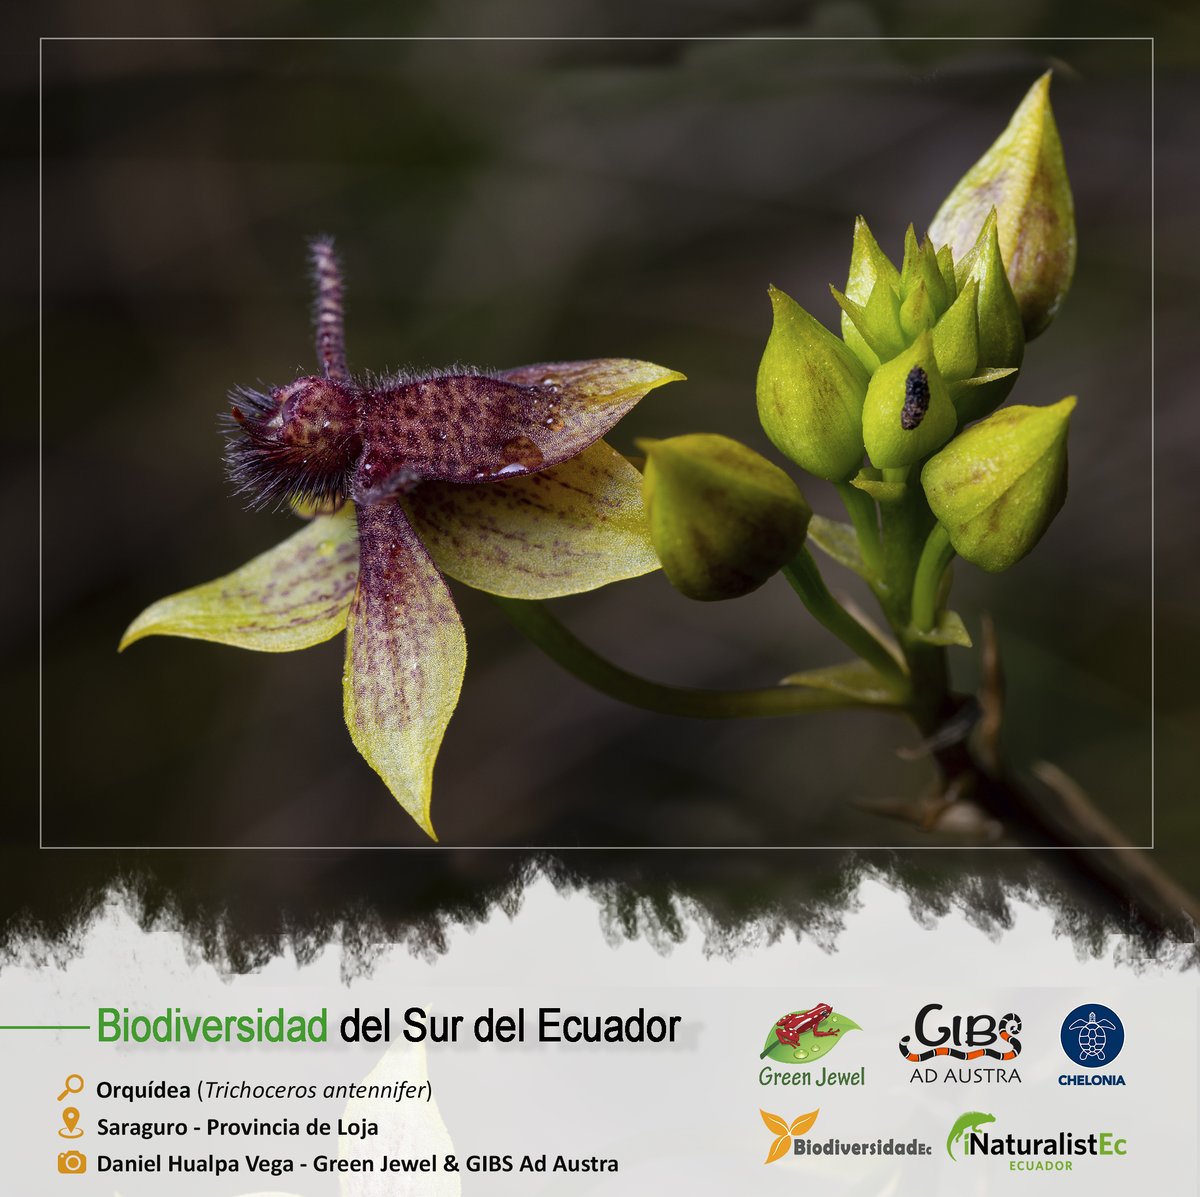 BIODIVERSIDAD DEL SUR DEL ECUADOR

🔎: Orquídea / Trichoceros antennifer
🏞️: Saraguro - Provincia de Loja
📷: Daniel Hualpa Vega - Green Jewel & GIBS

#BiodiversidadDelSurDelEcuador #GreenJewel #Chelonia #BiodiversidadEc #iNaturalistEc #CienciaCiudadana #SomosInaturalistEc